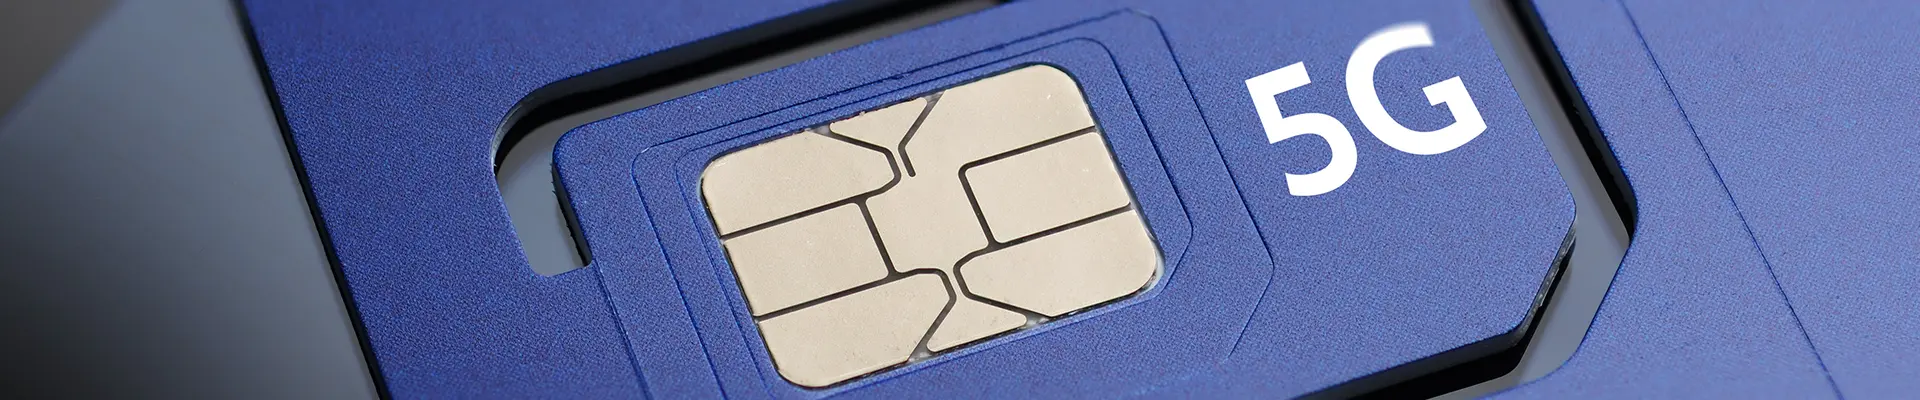 SIM Card Applicant Verification